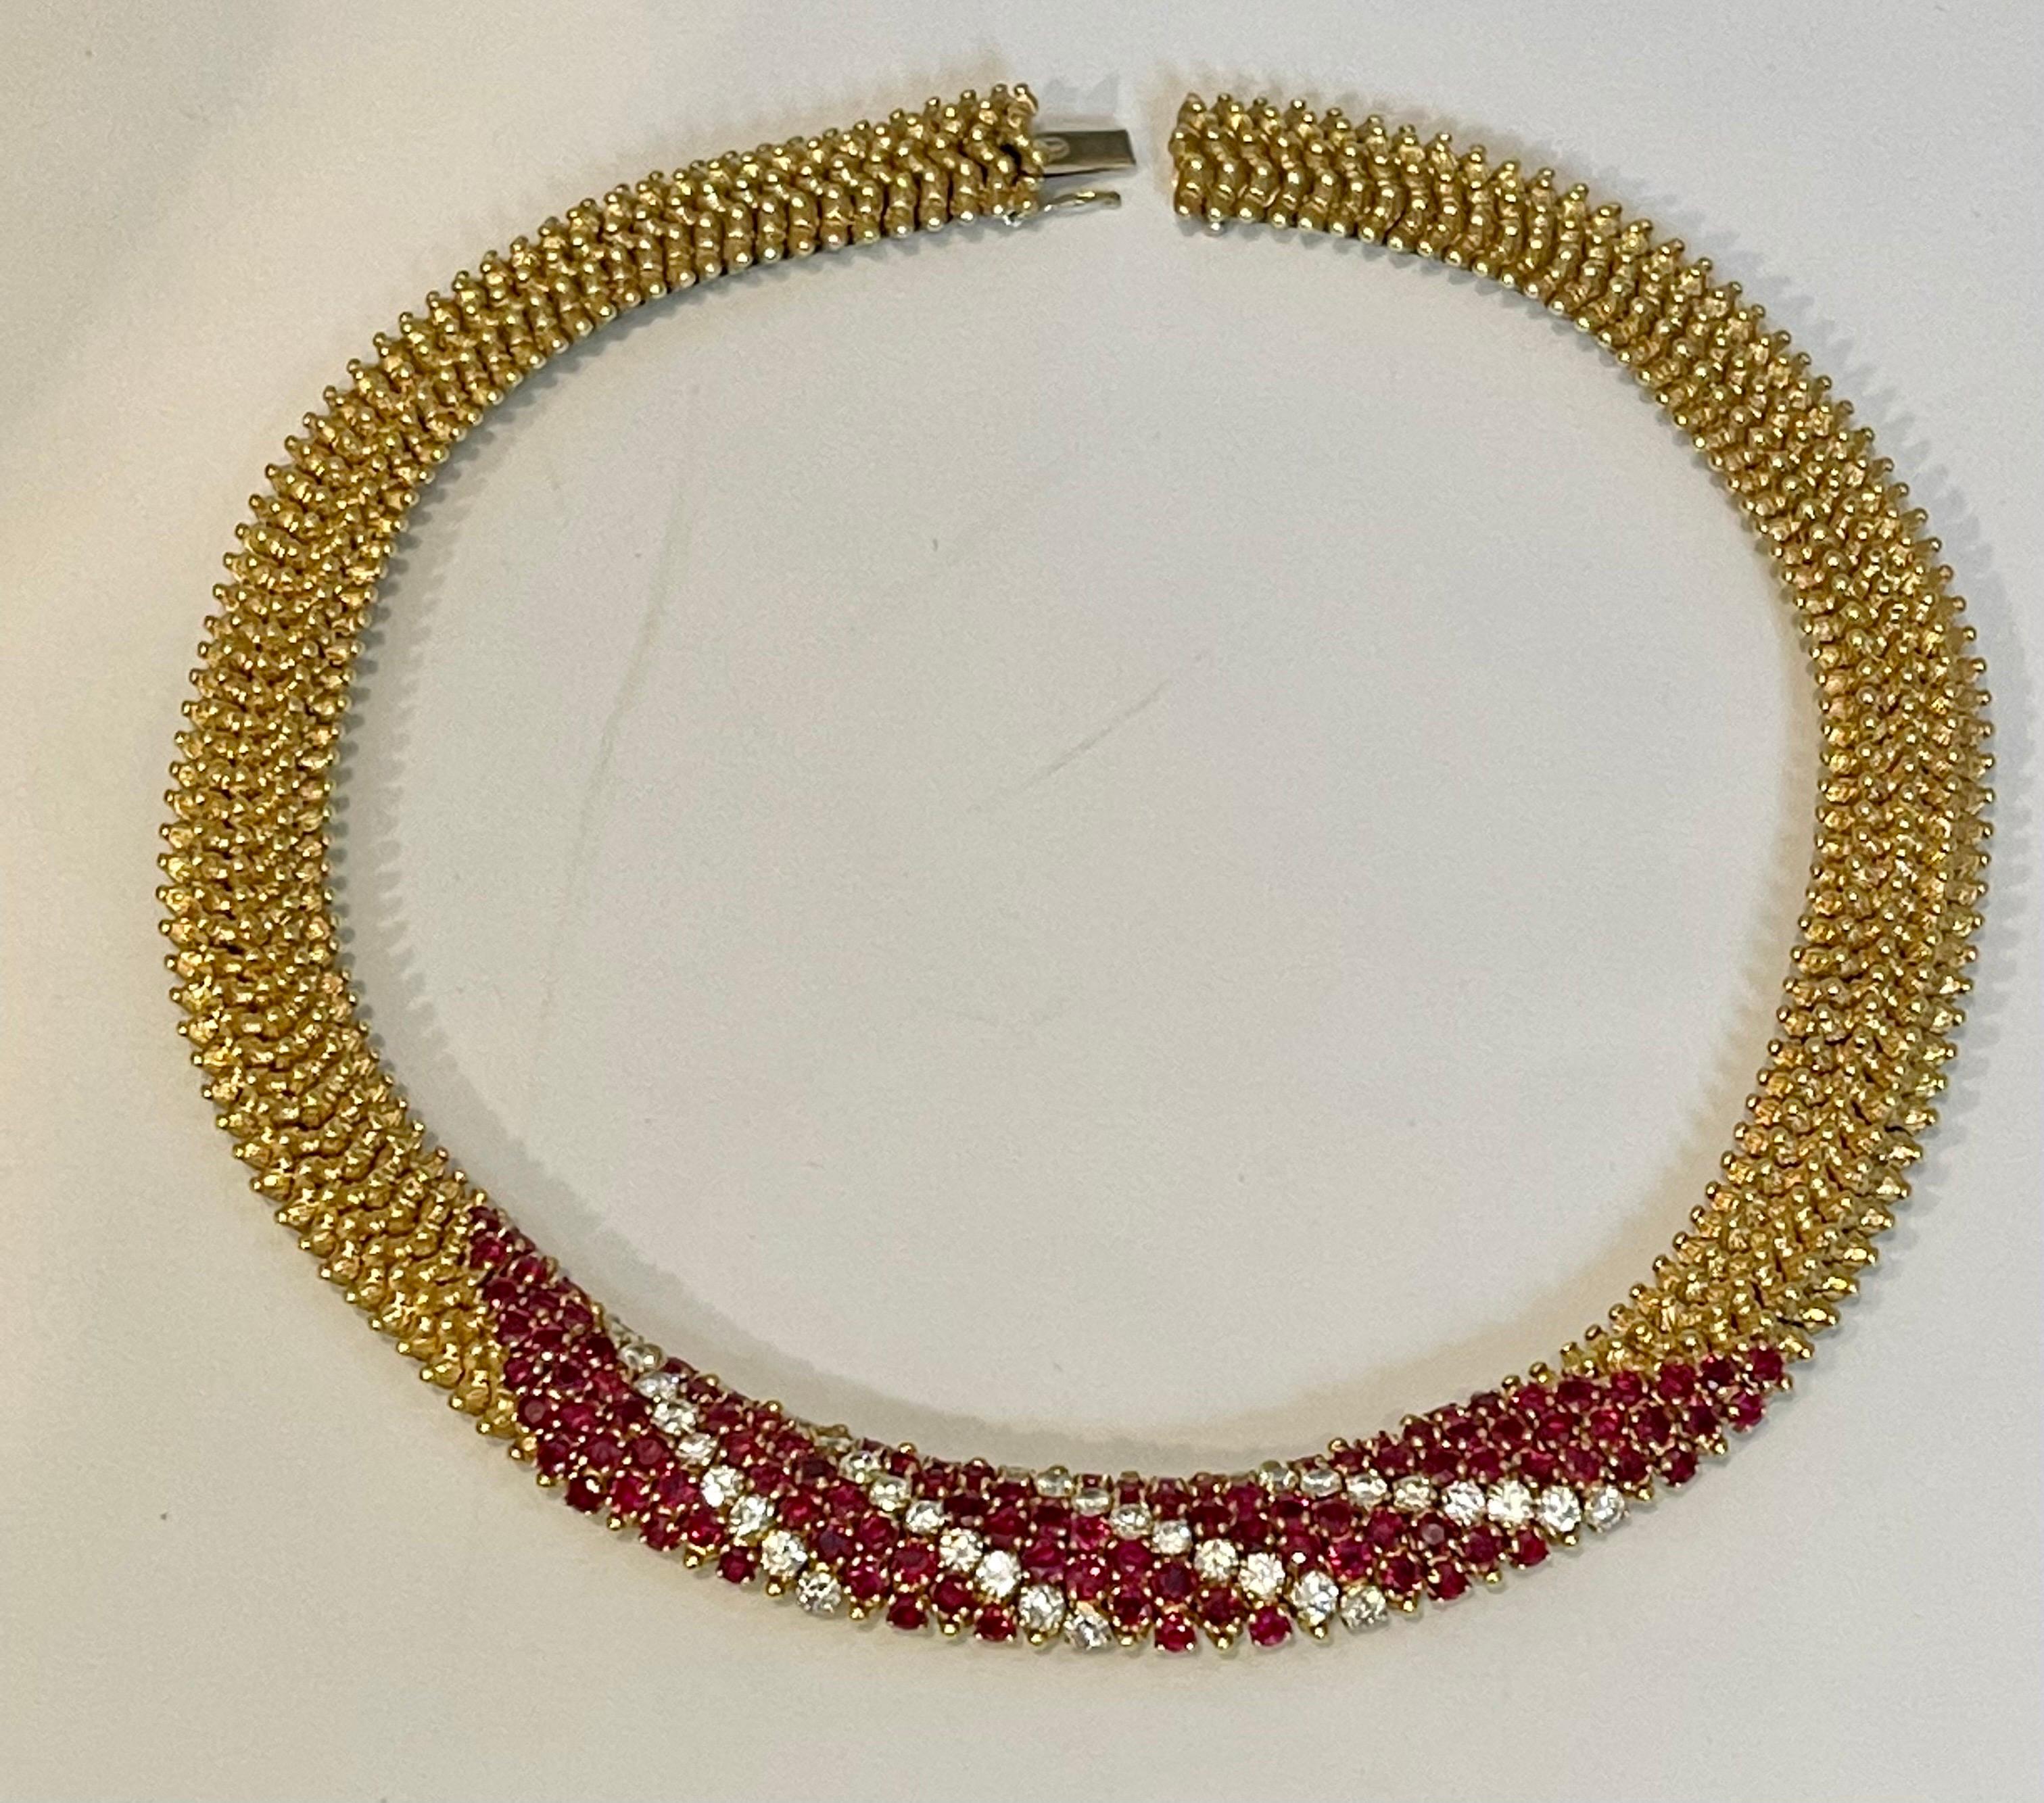 Natural 12 Ct Burma Ruby and 5 Ct Diamond Necklace 18 Karat Yellow Gold 166gm  1